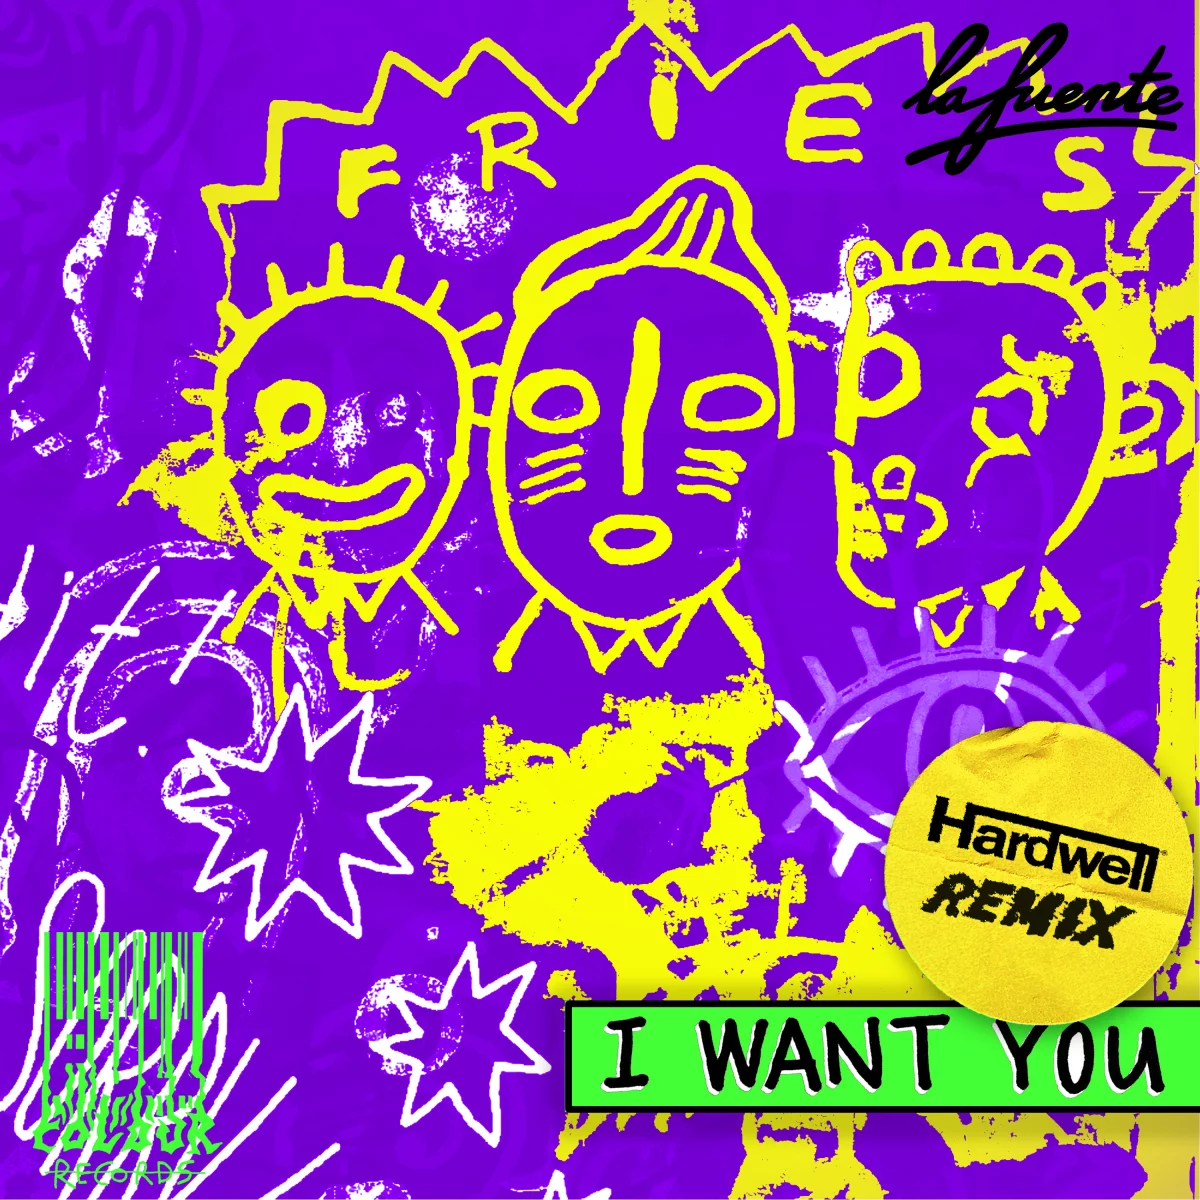 I Want You (Hardwell Remix) - La Fuente⁠, Hardwell⁠ 